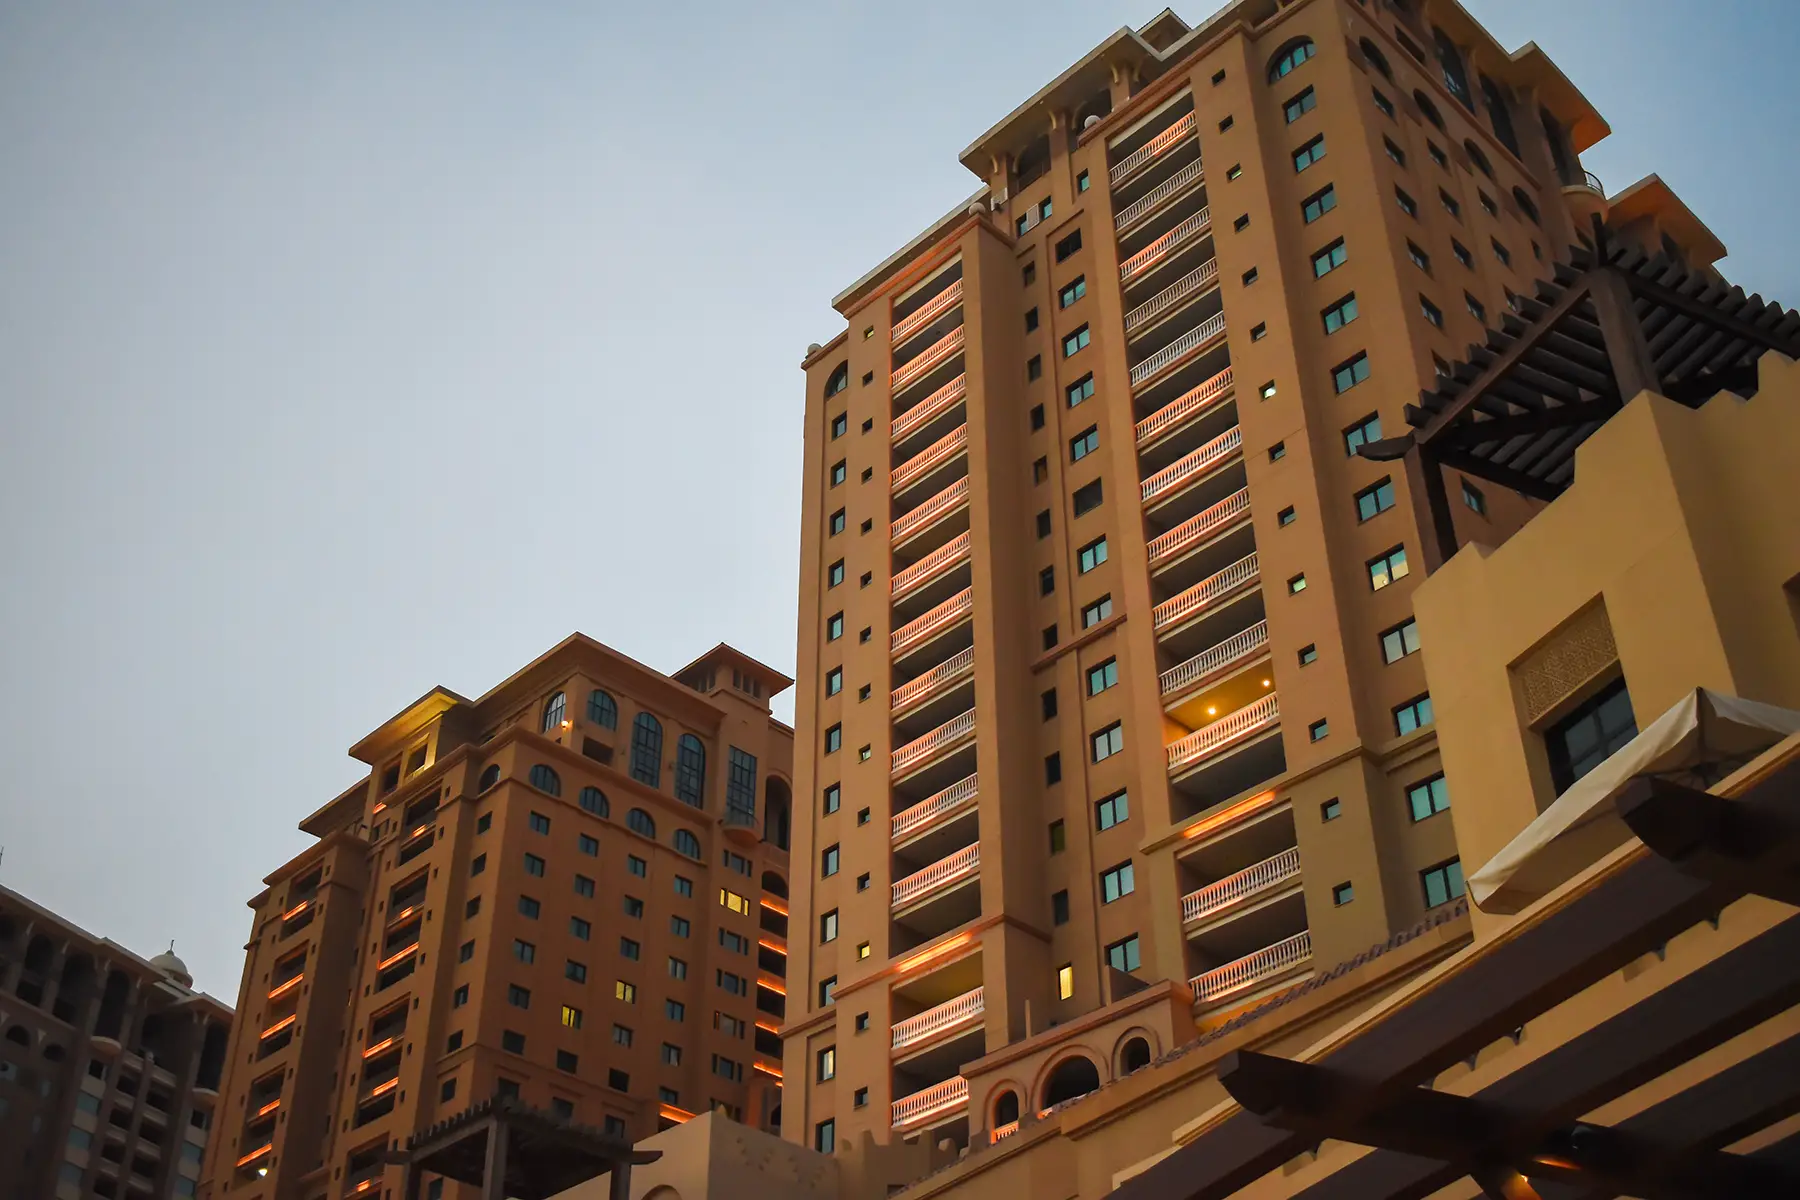 Apartment buildings in Doha, Qatar